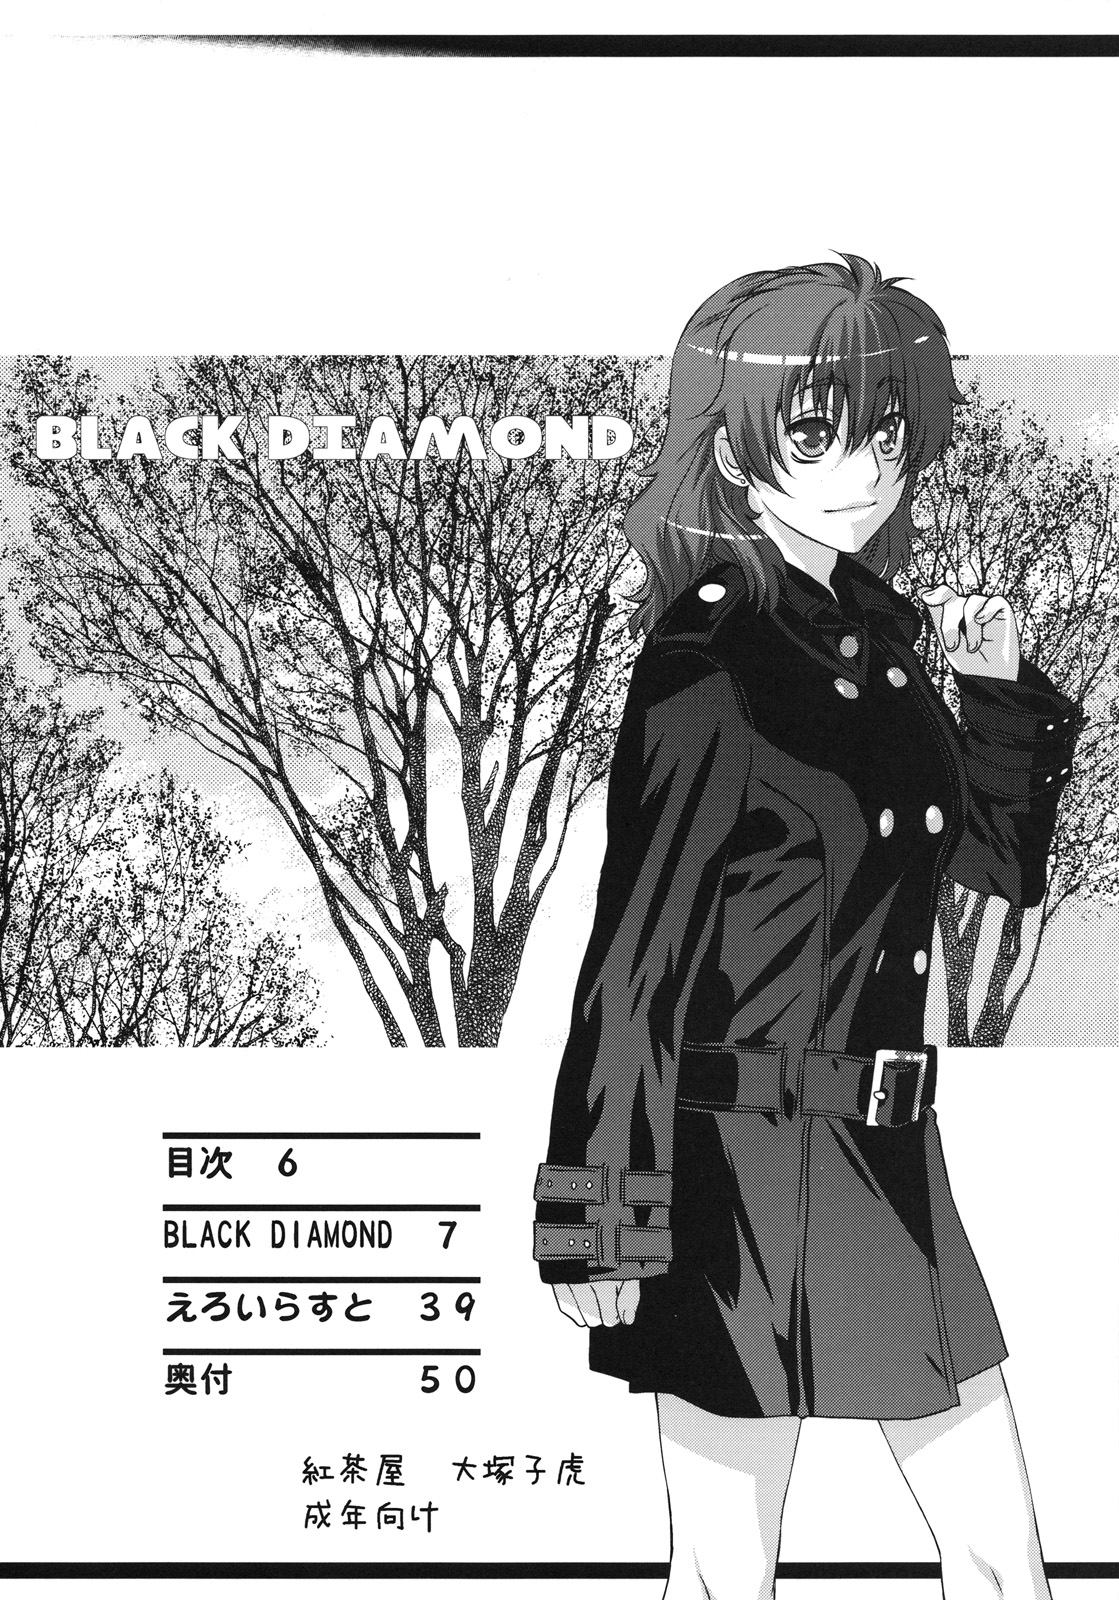 black diamond www hentairules net 05